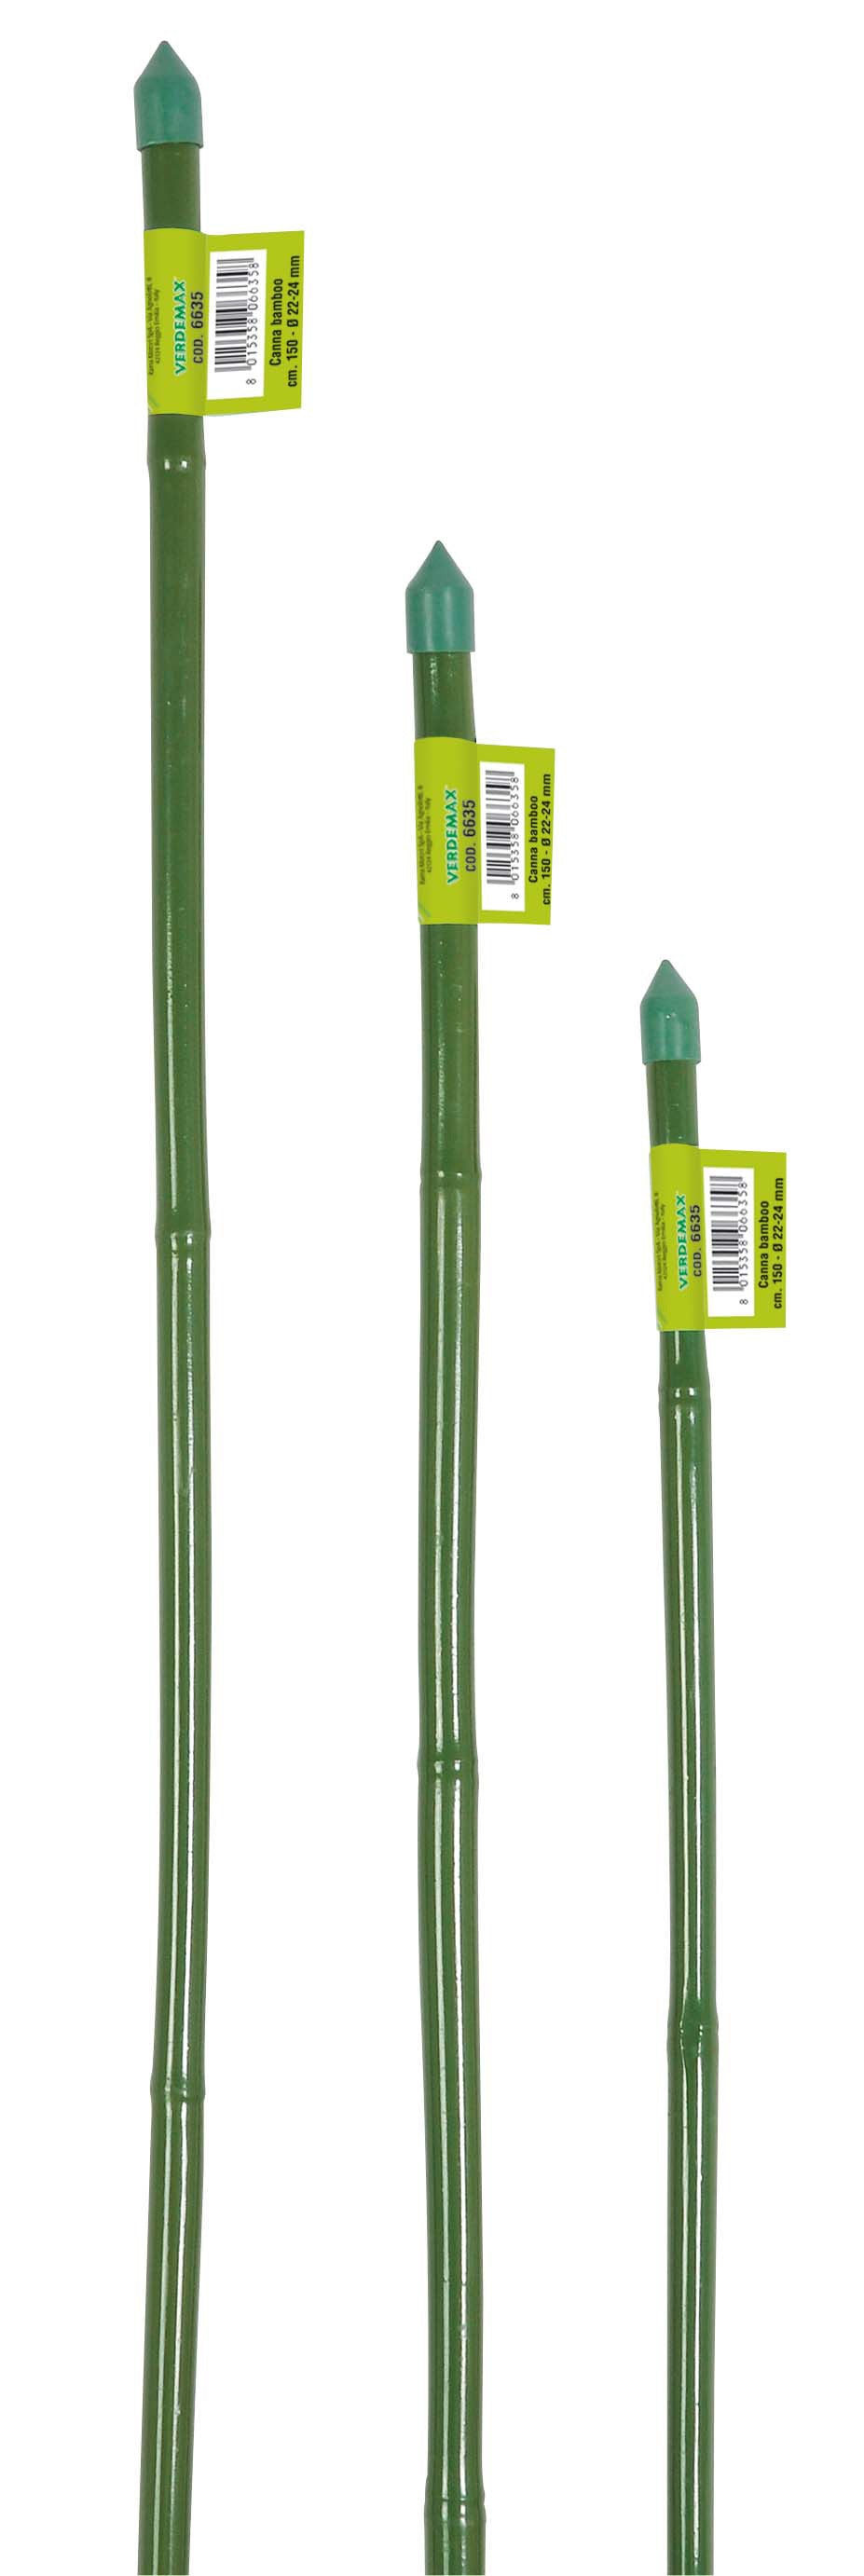 Tutore in bamboo plastificato cm 120 d. 10-12